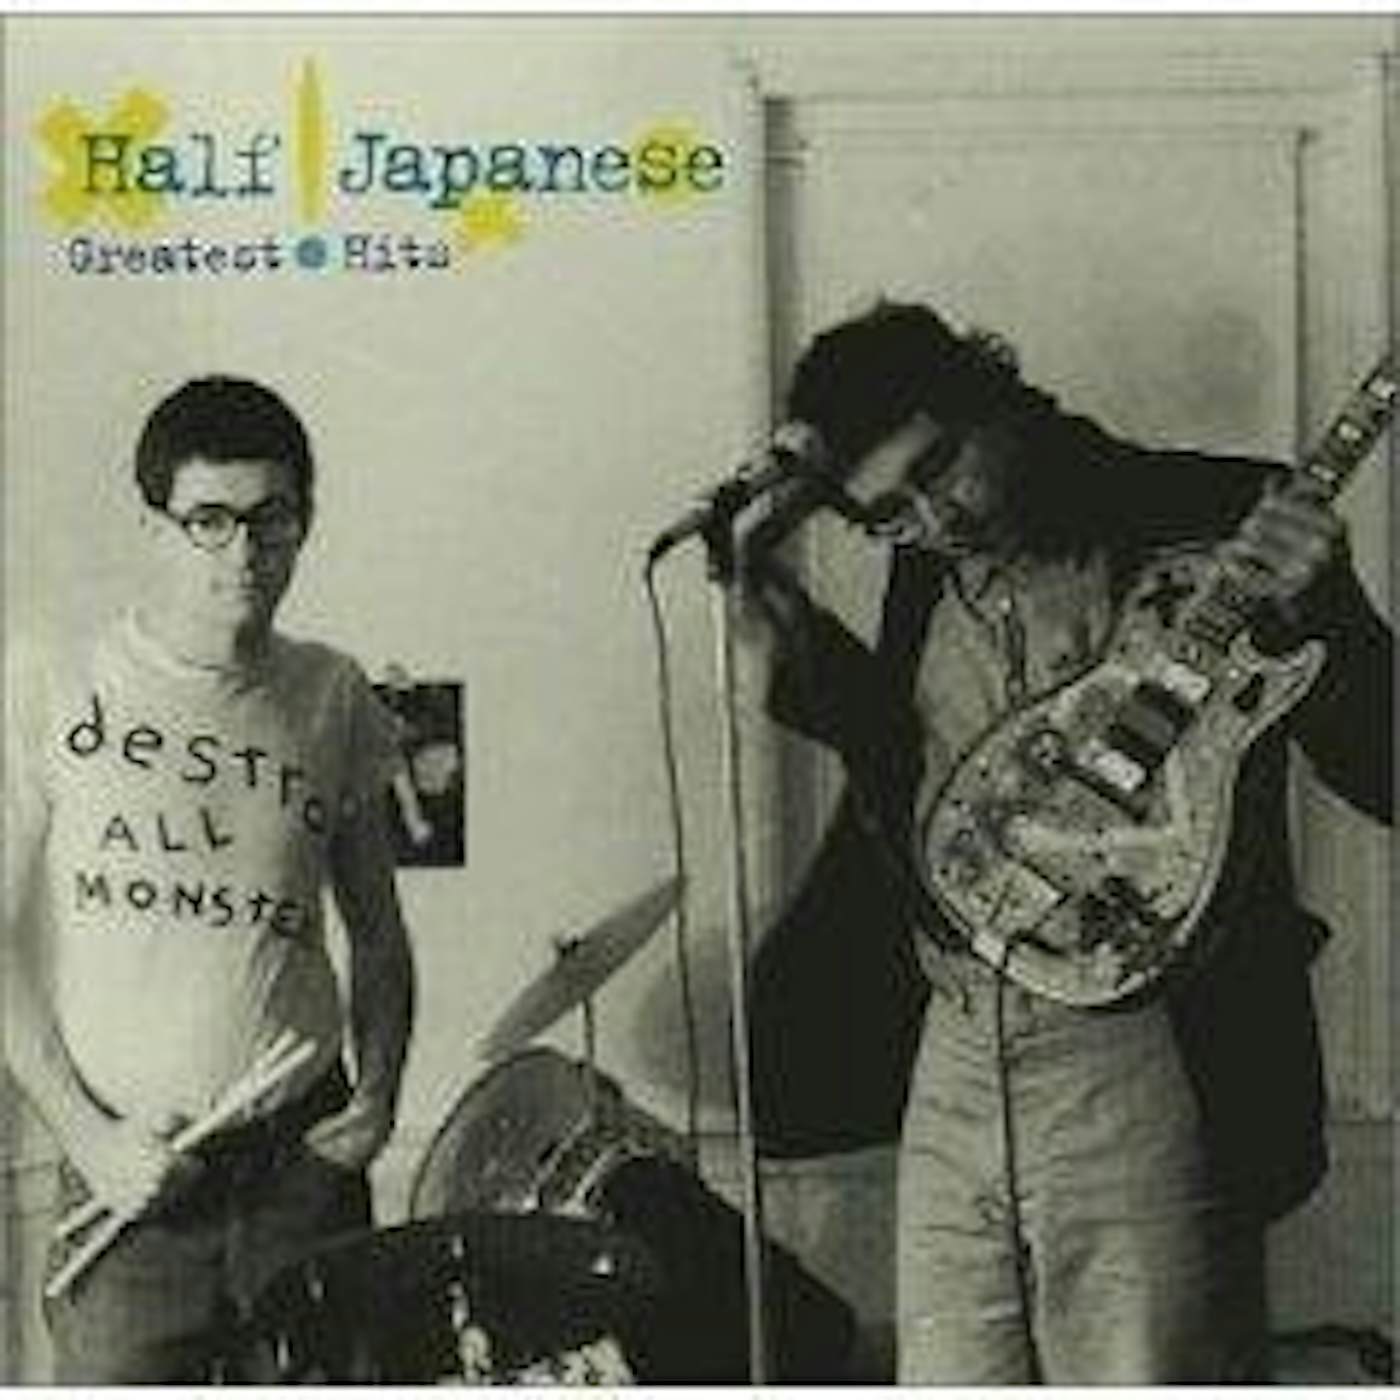 Half Japanese Greatest Hits Vinyl Record